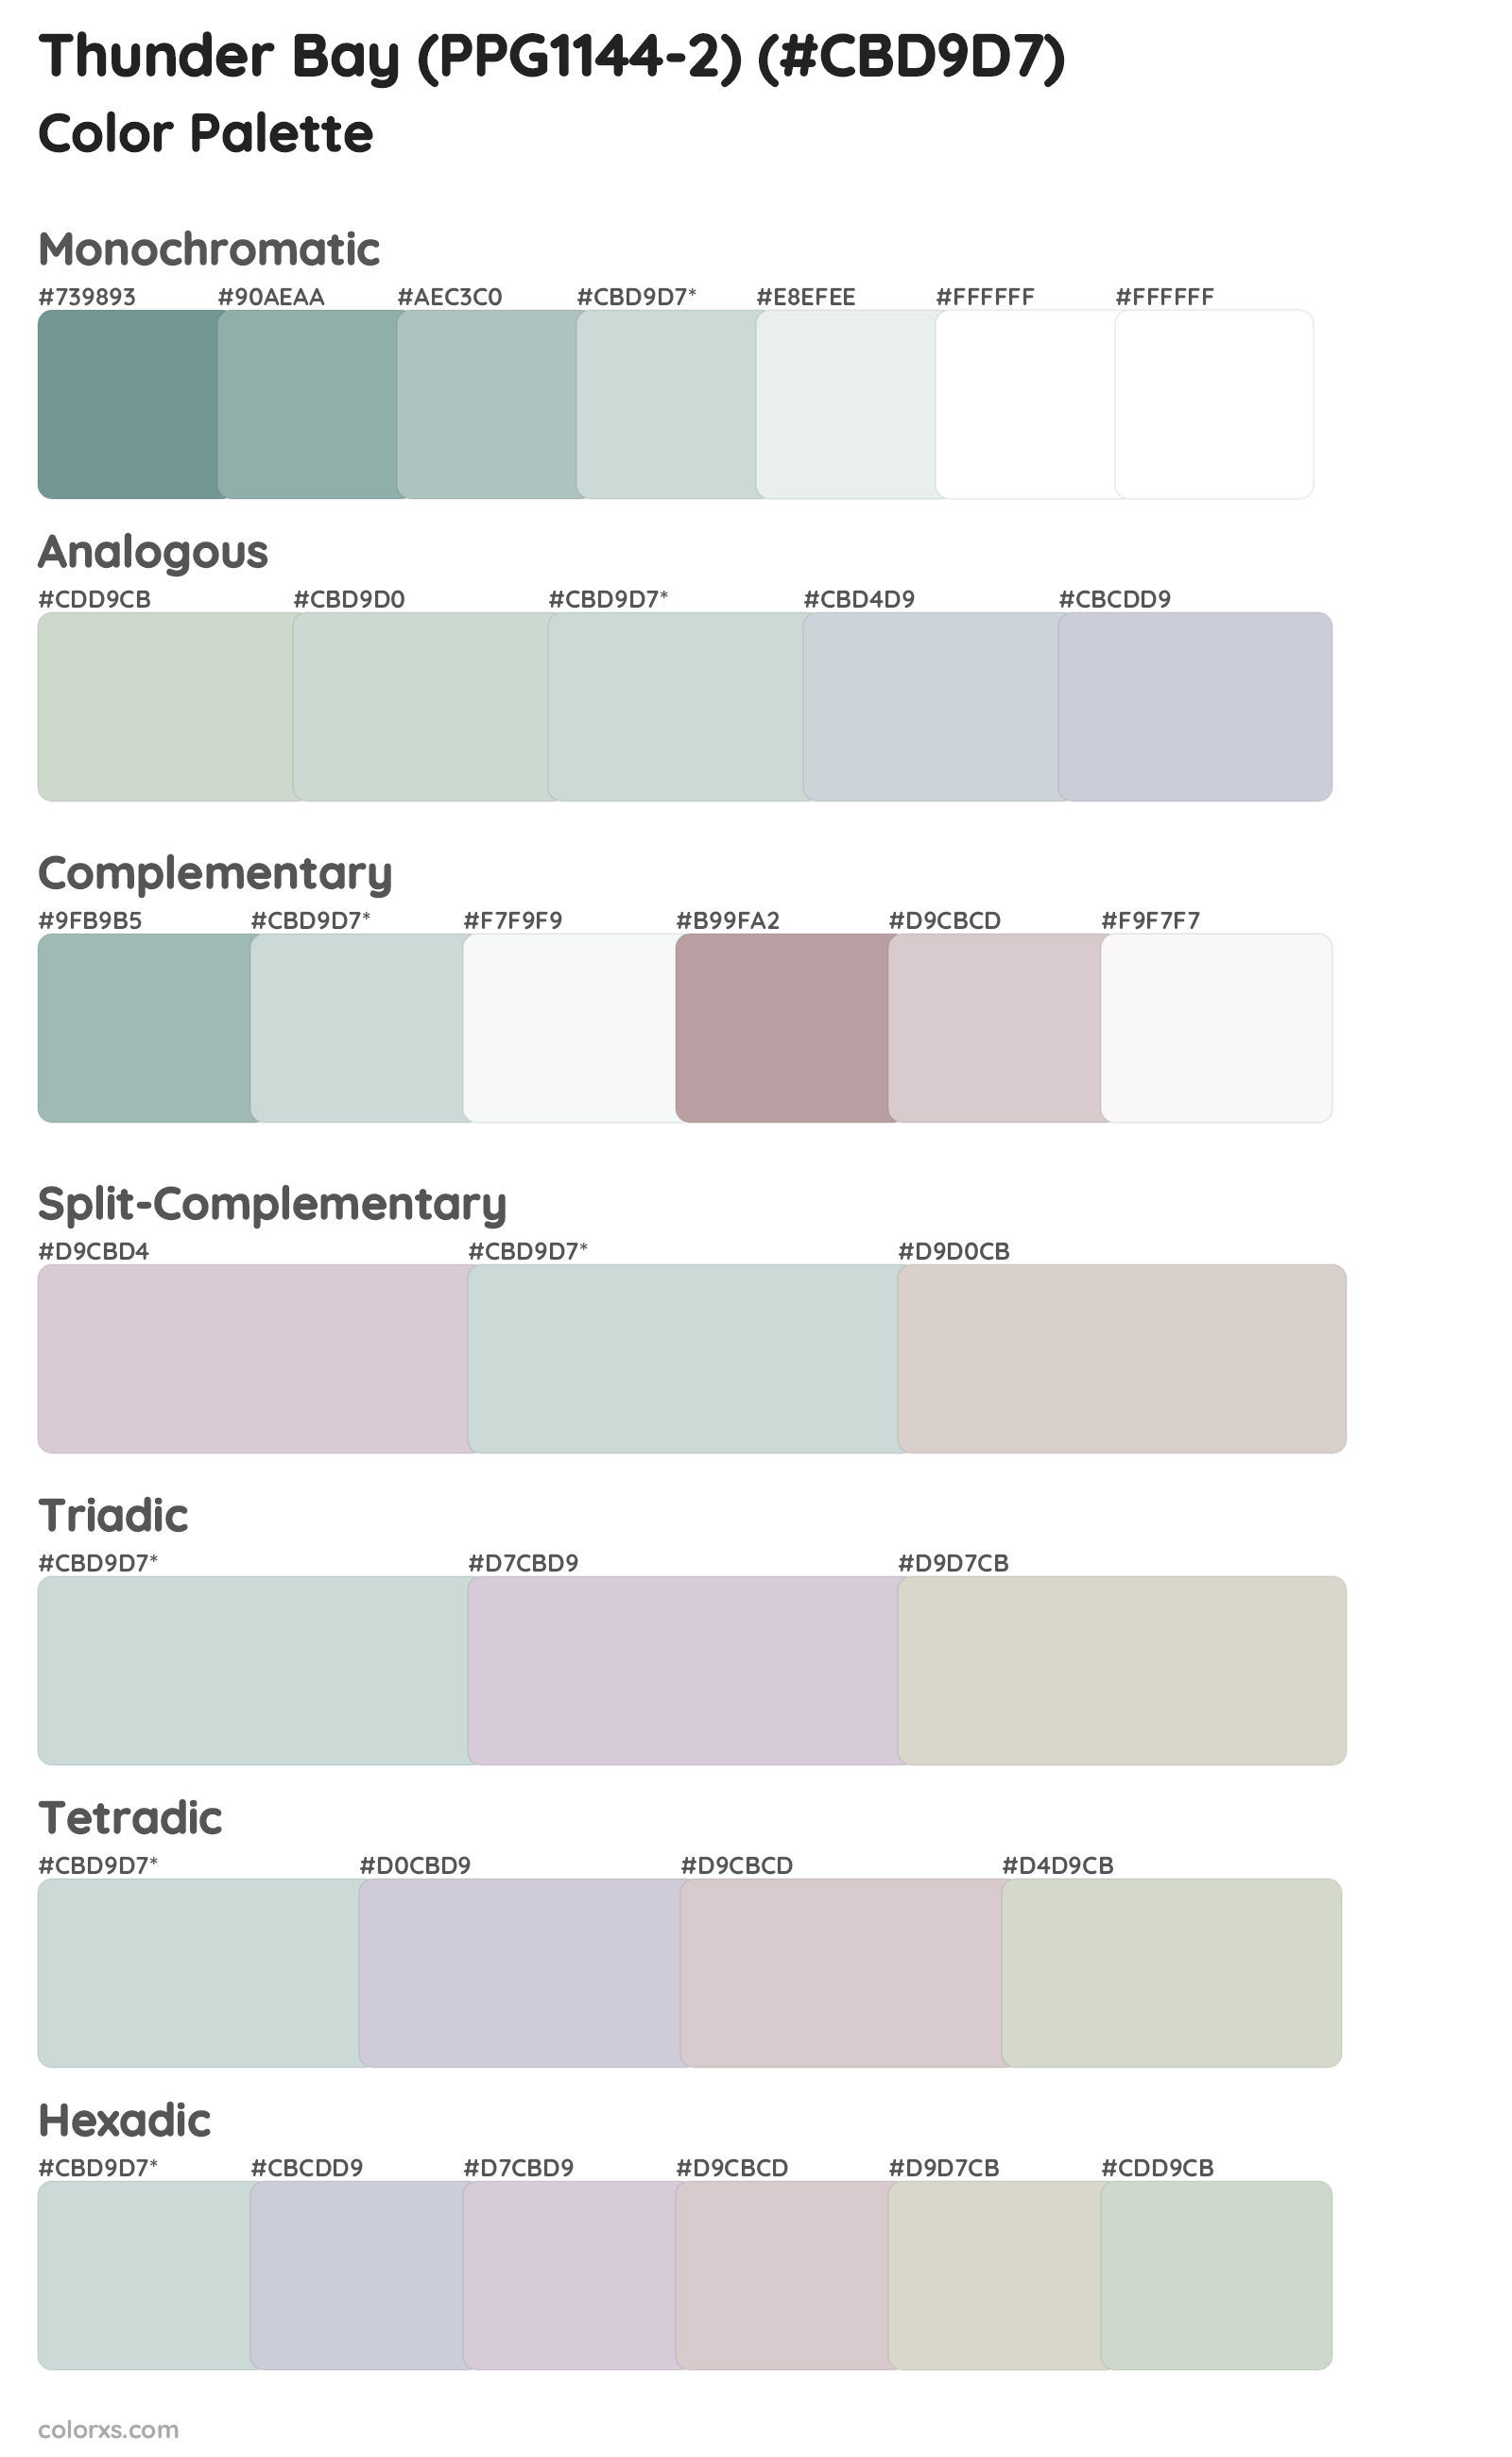 Thunder Bay (PPG1144-2) Color Scheme Palettes